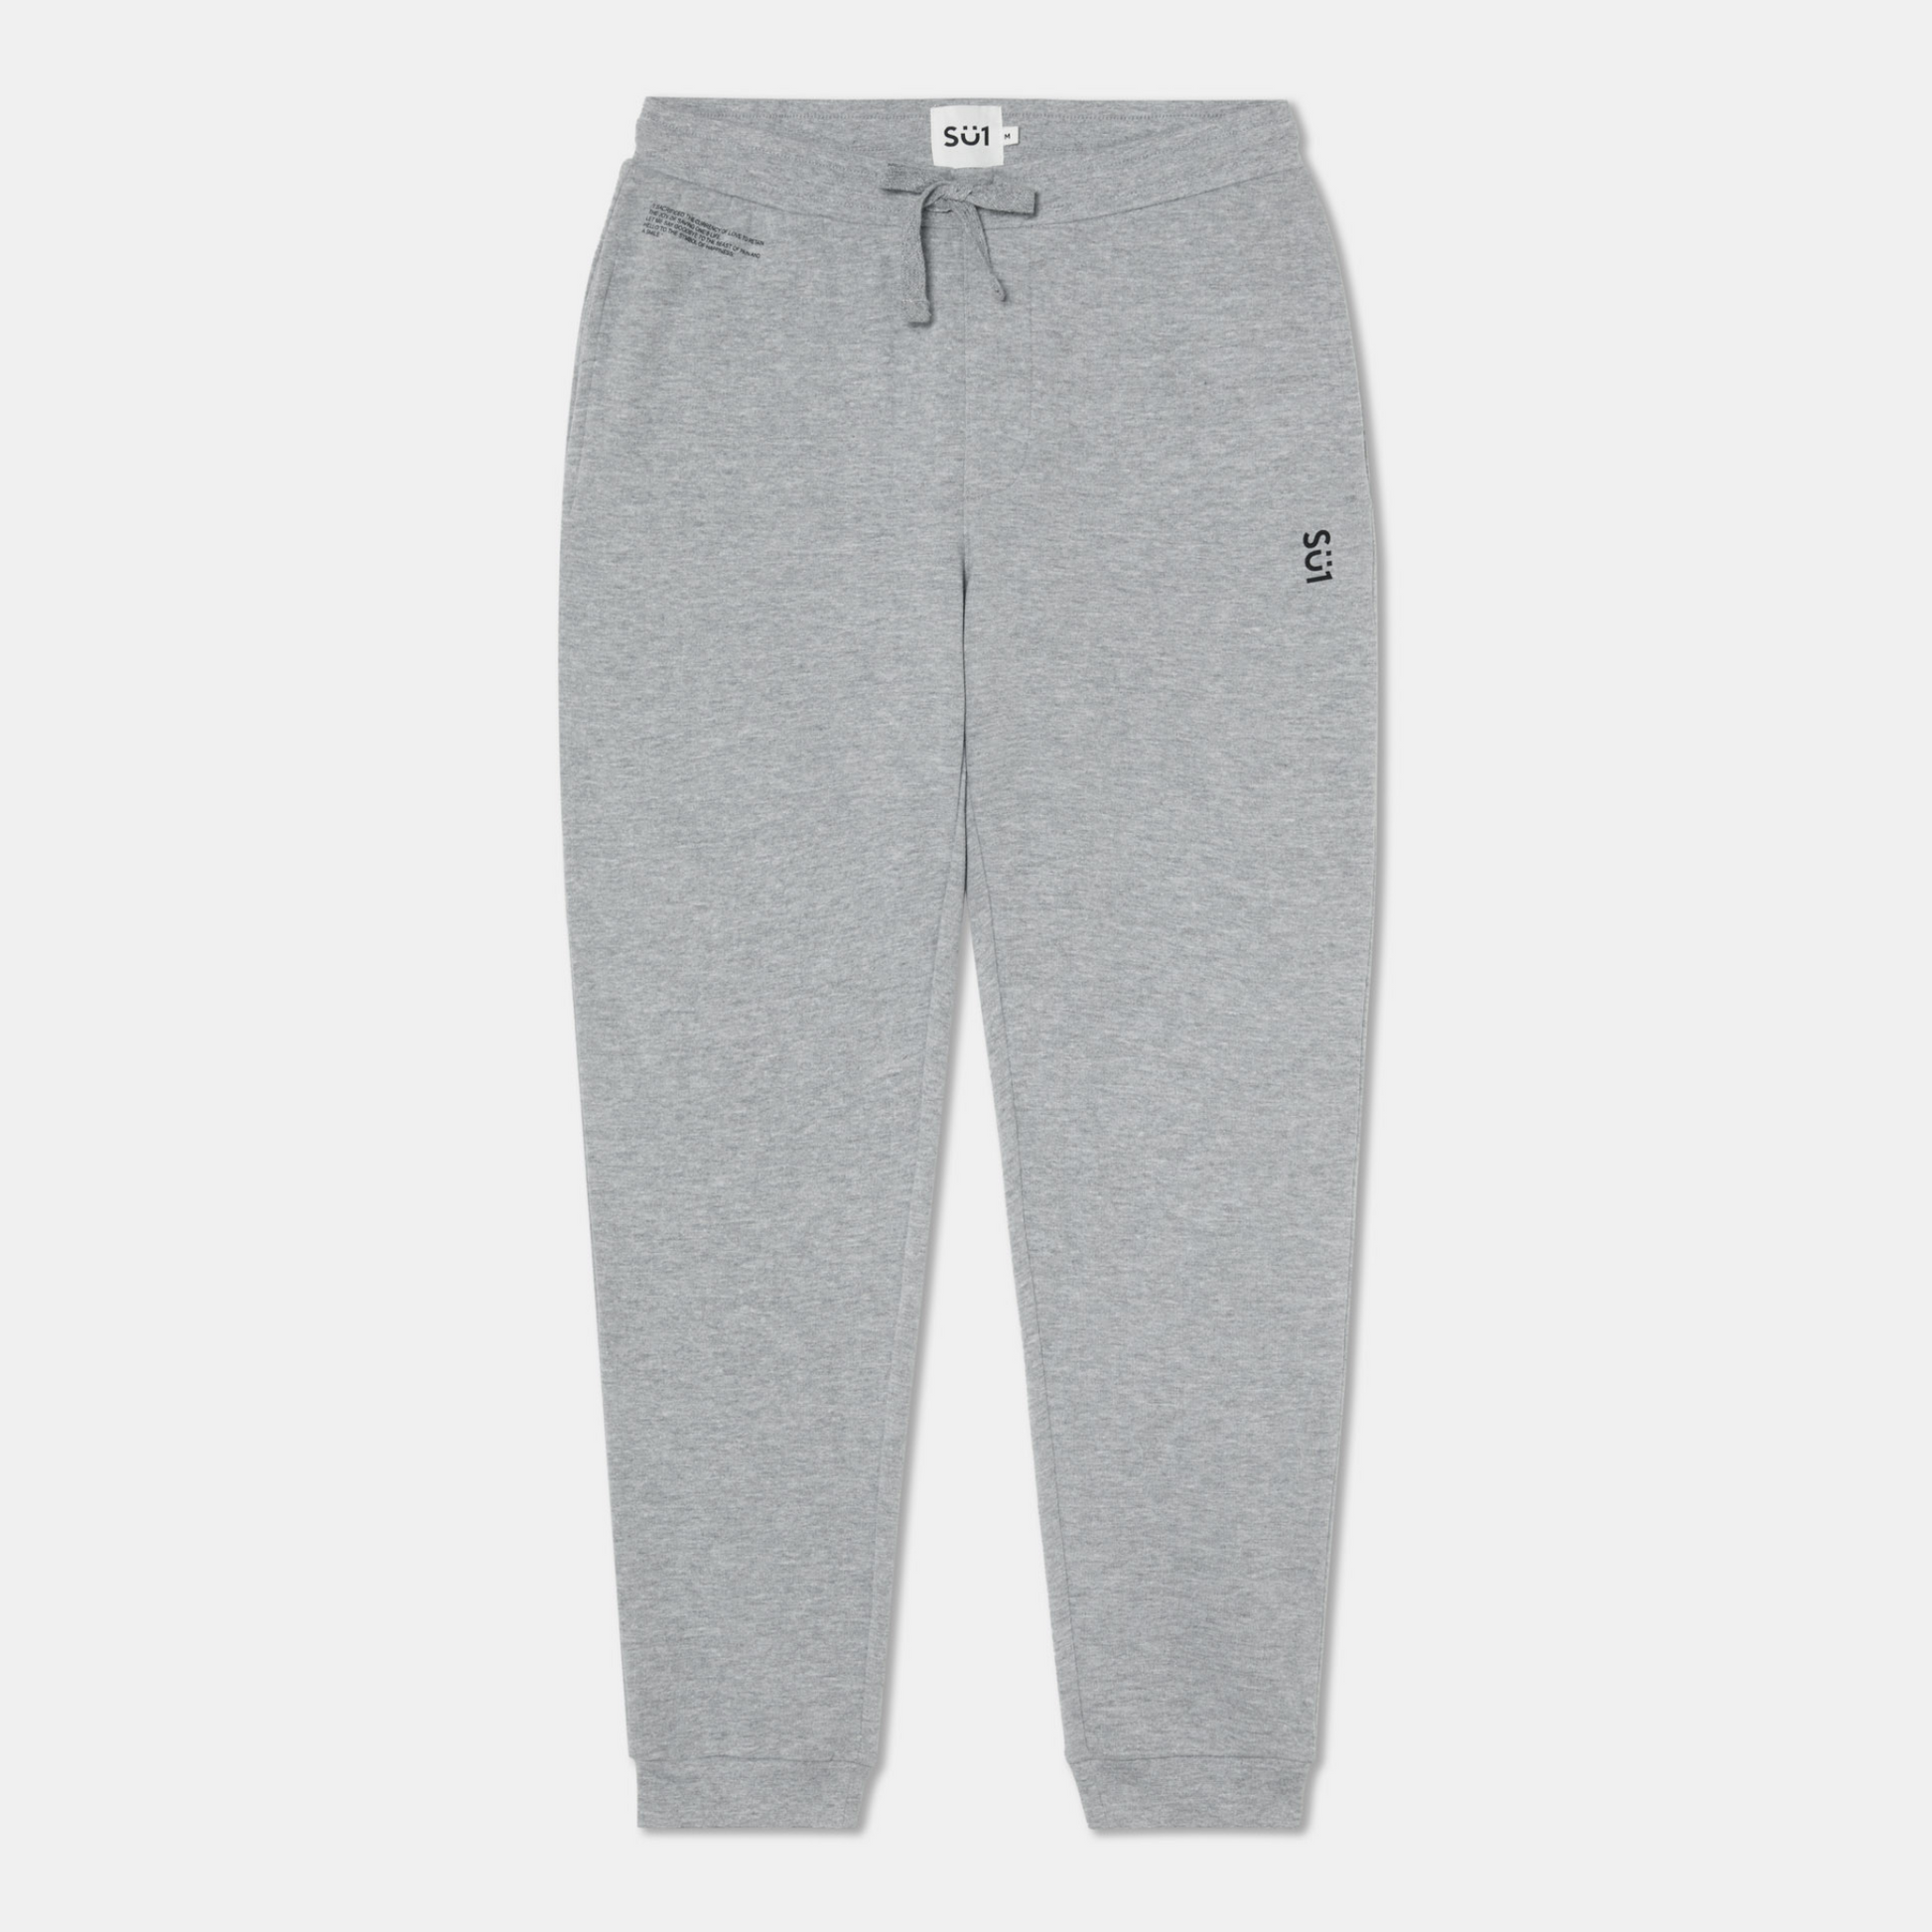 Organic Cotton Sport Trousers Pants Grey Front